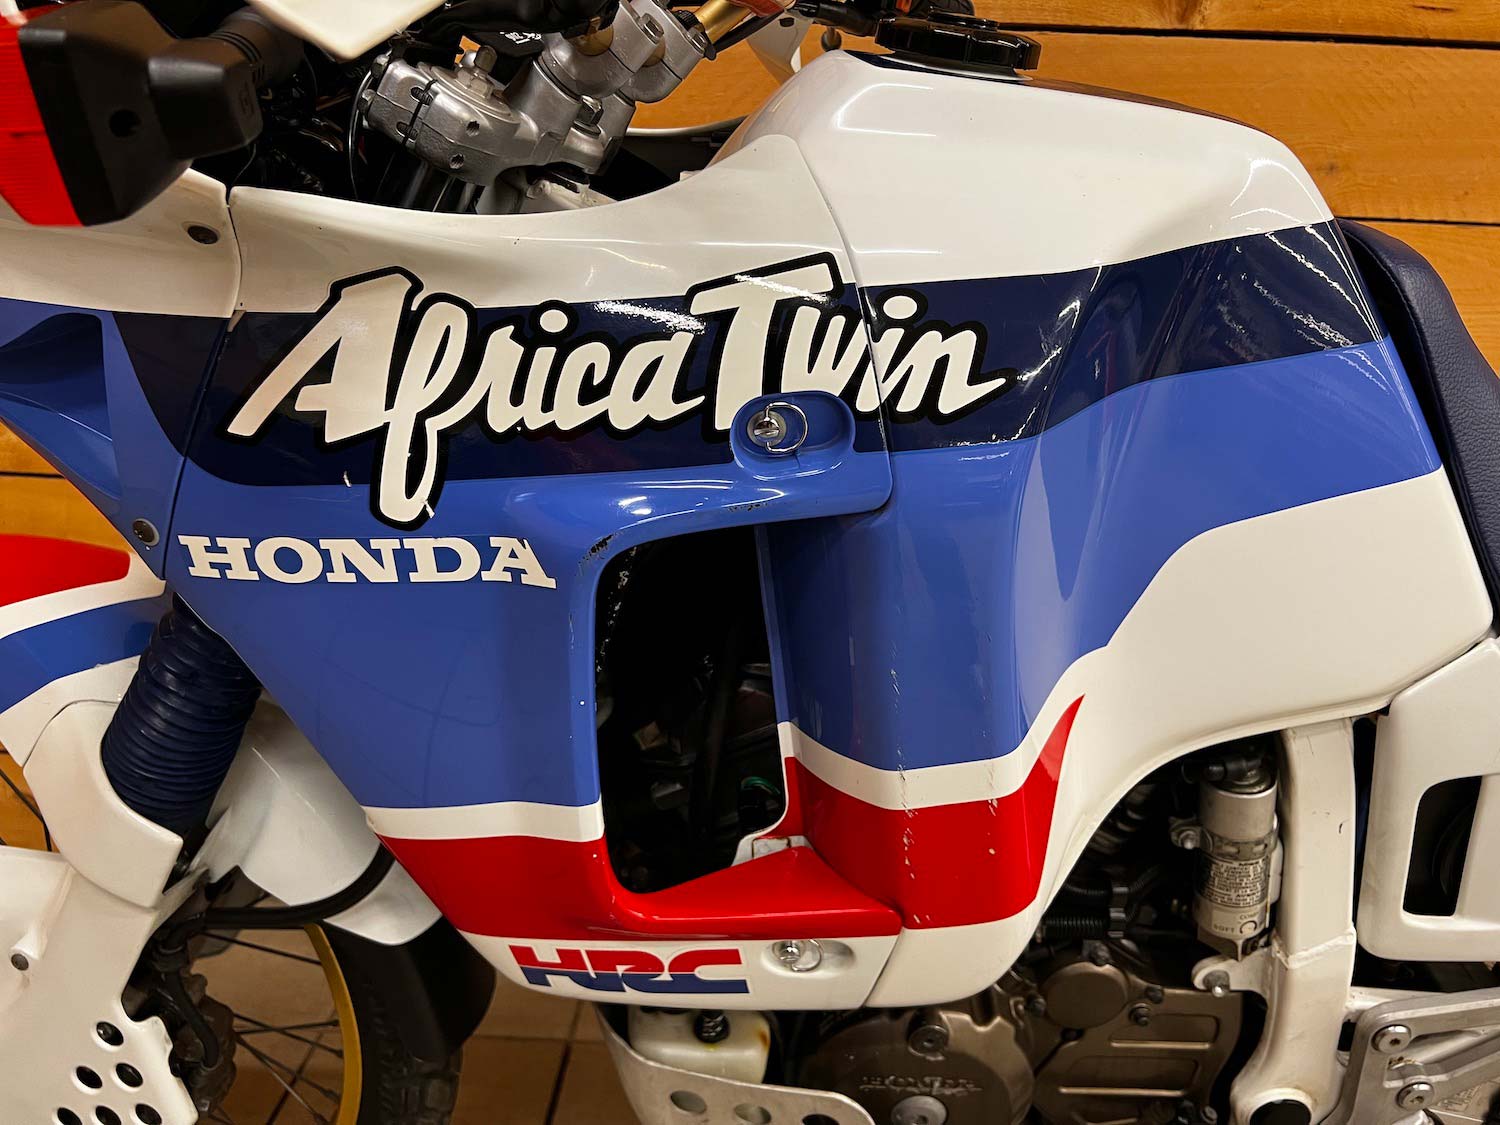 Honda_Africa_Twin_Cezanne_classic_motorcycle_3-153.jpg